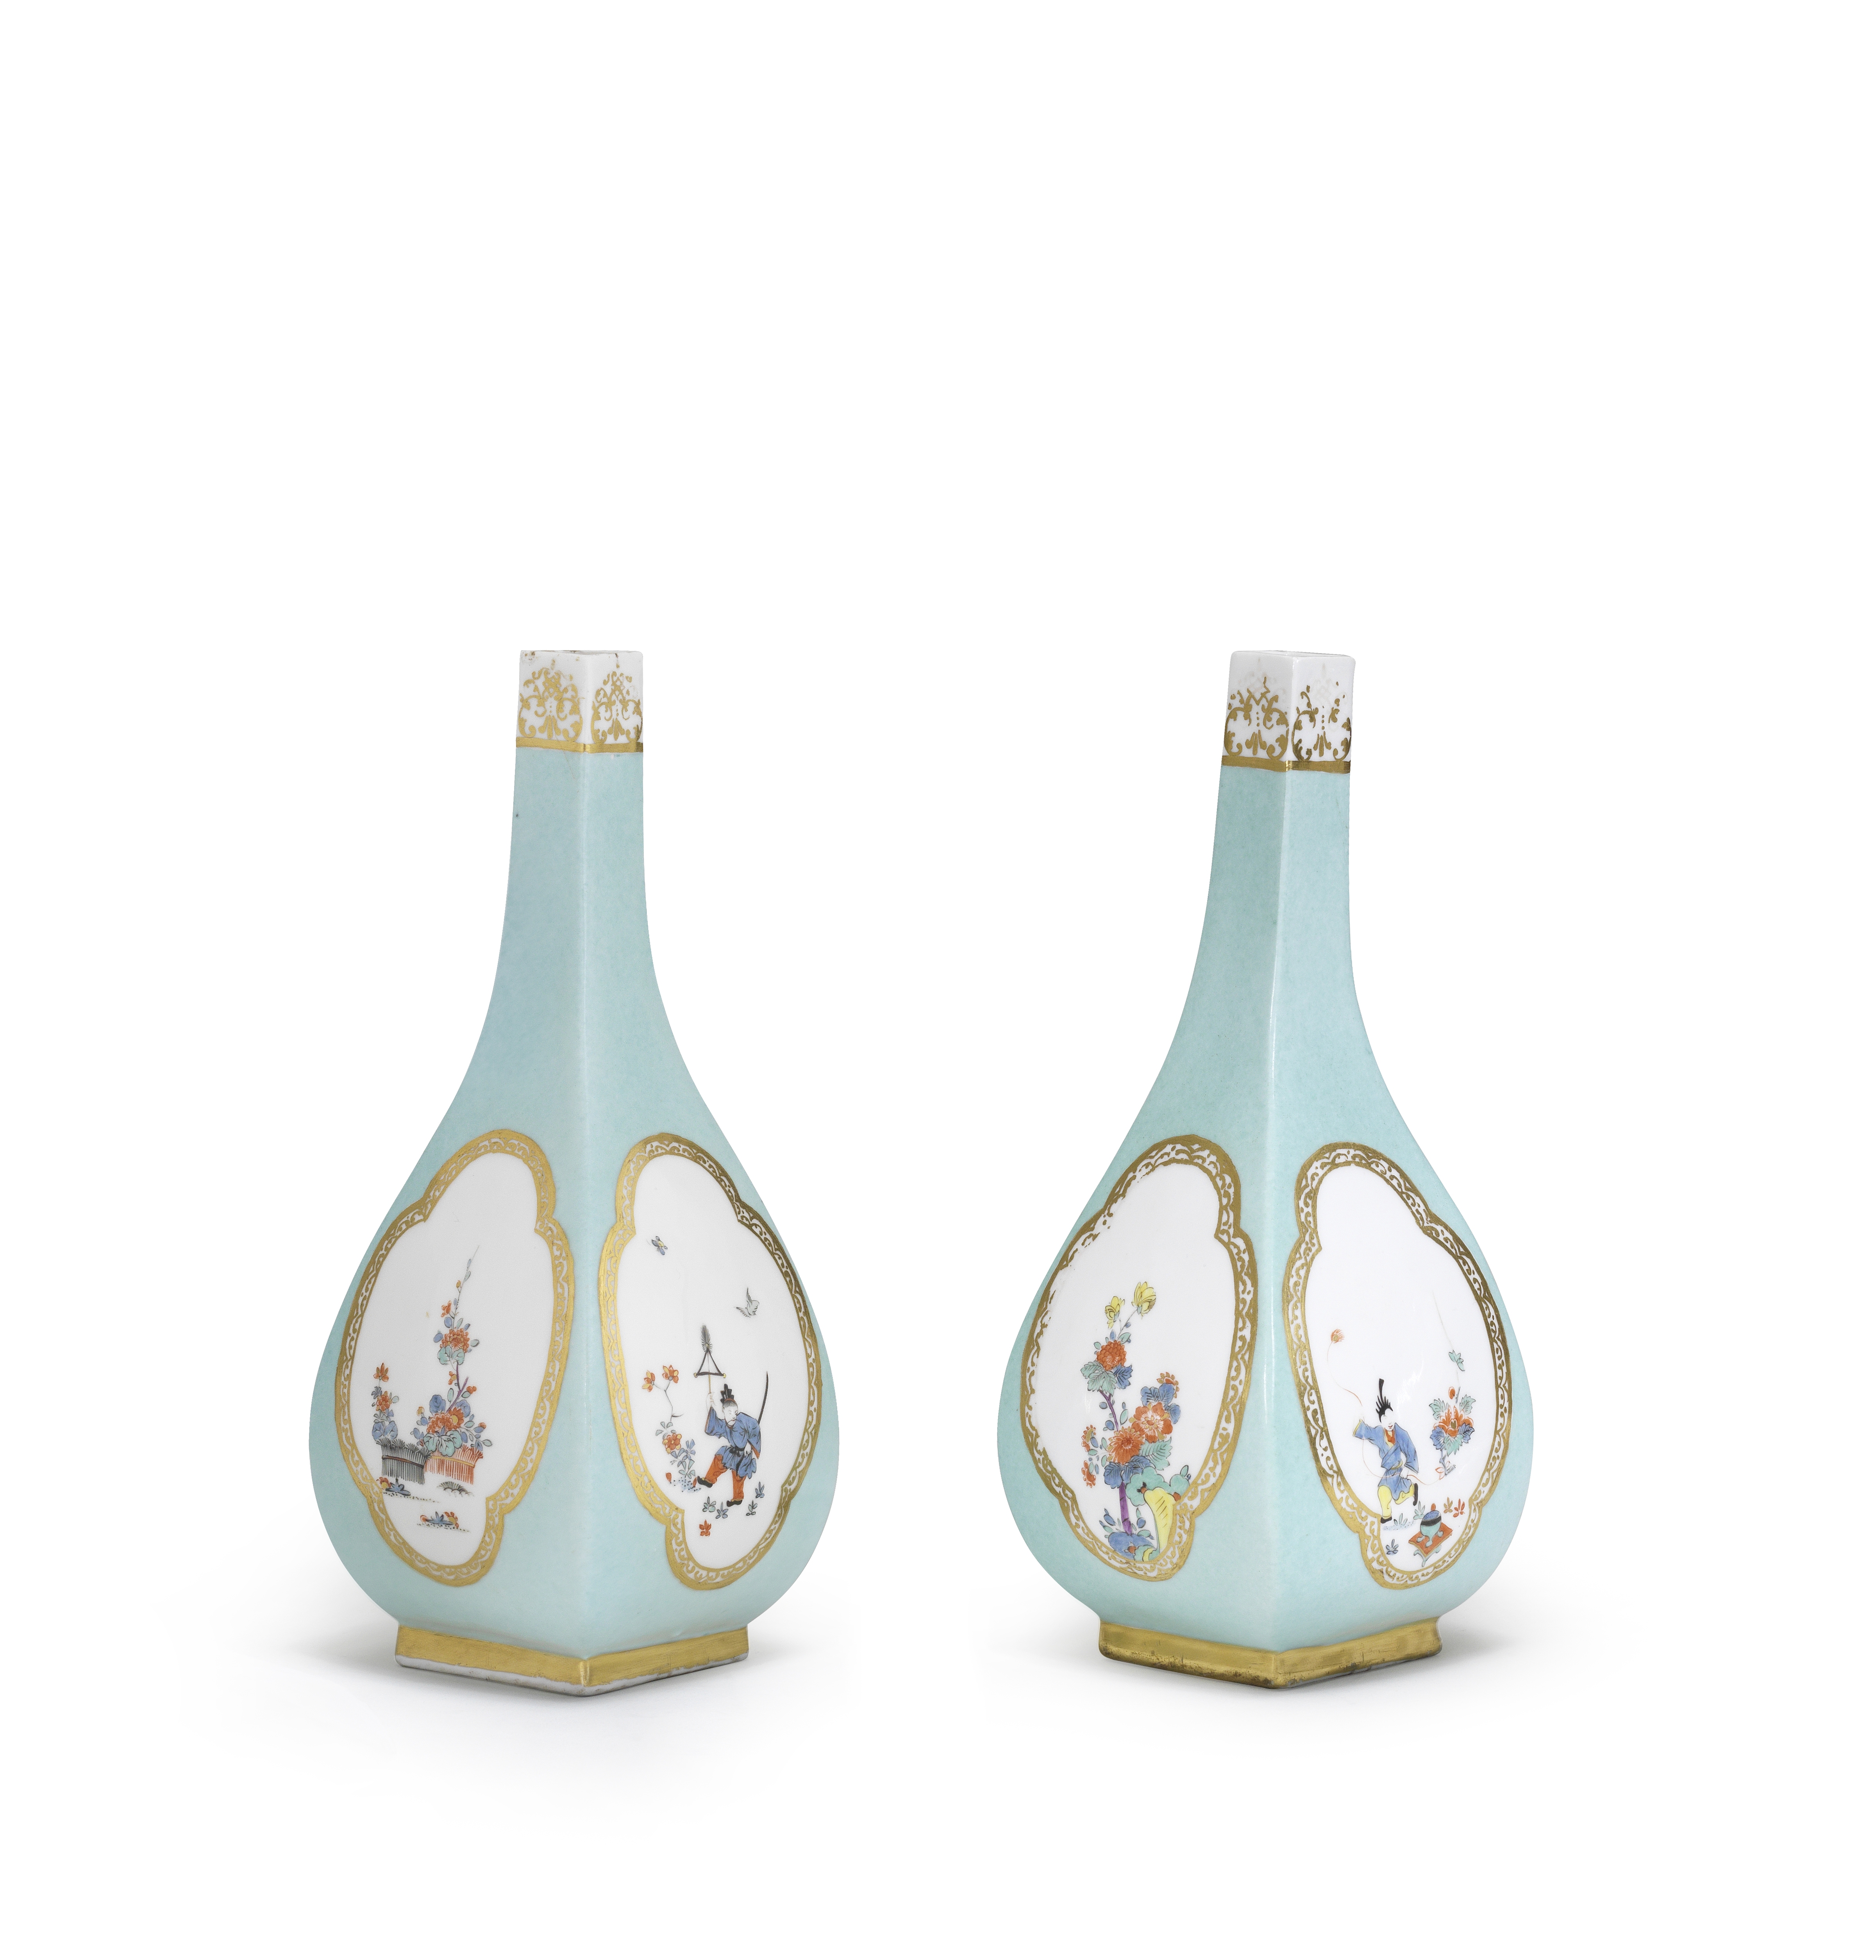 A pair of Meissen turquoise-ground sake bottles, circa 1733-34